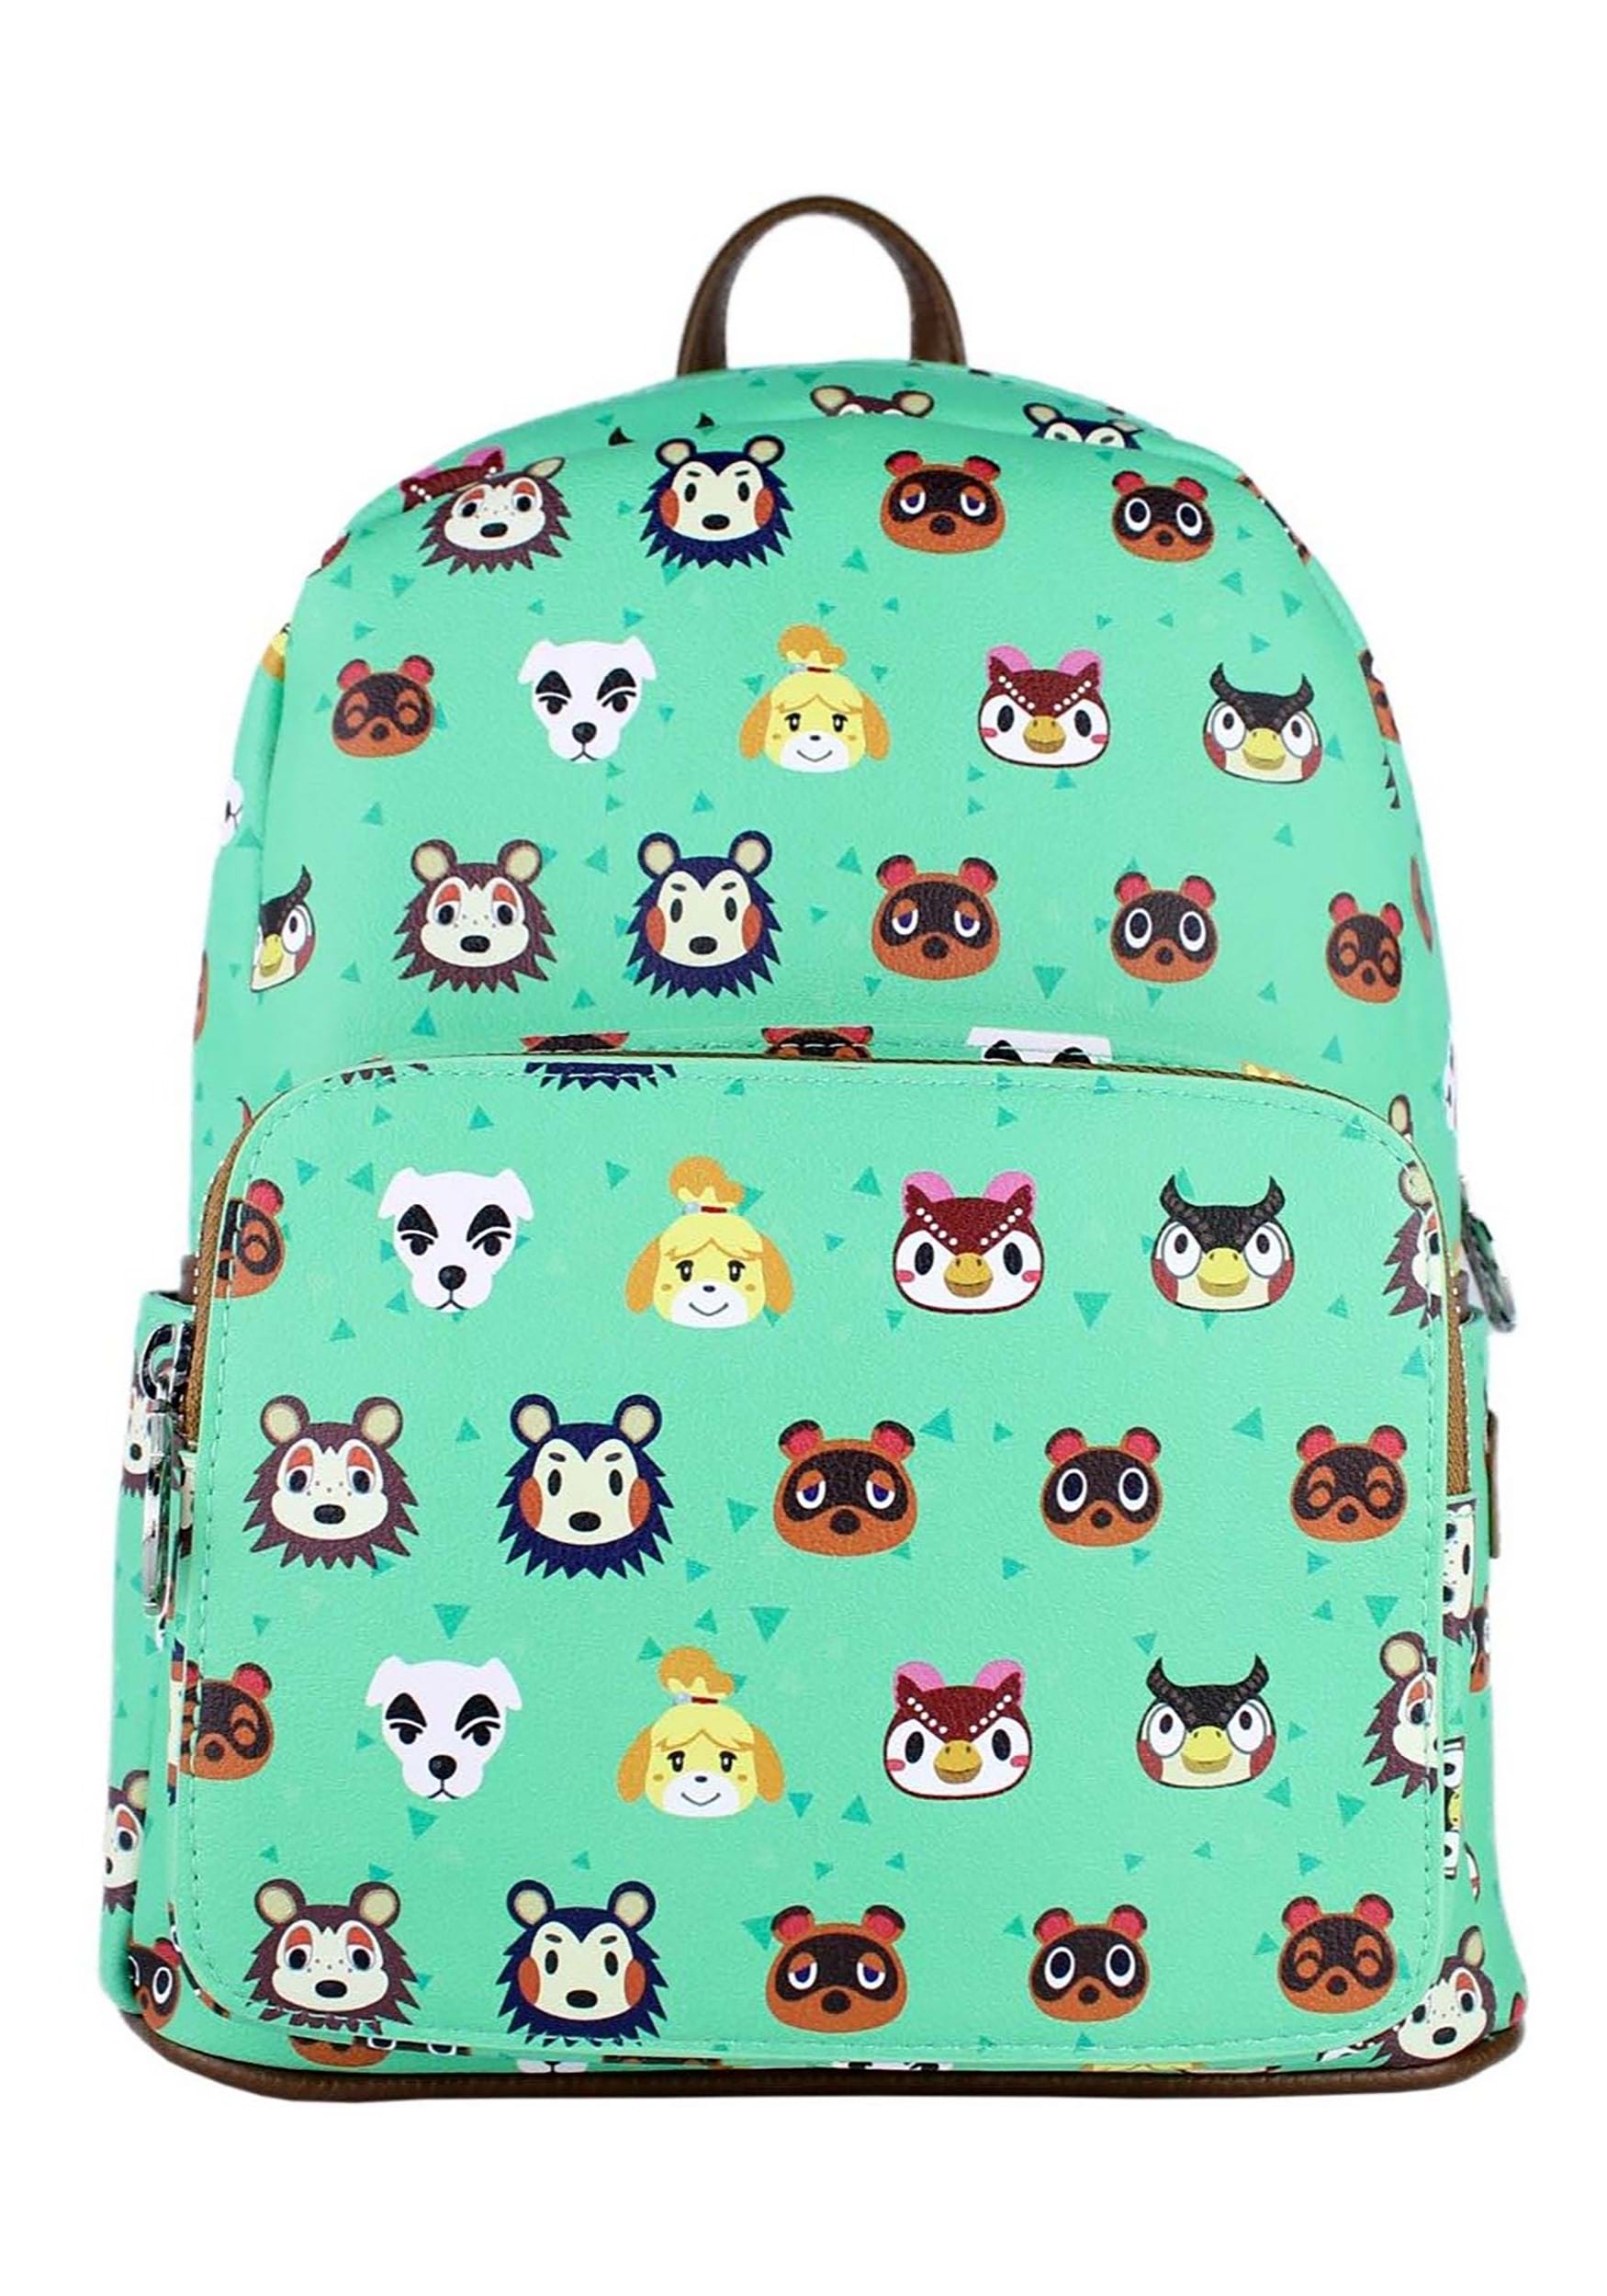 Animal Crossing Cakeworthy Green Mini Backpack | Animal Crossing Gifts